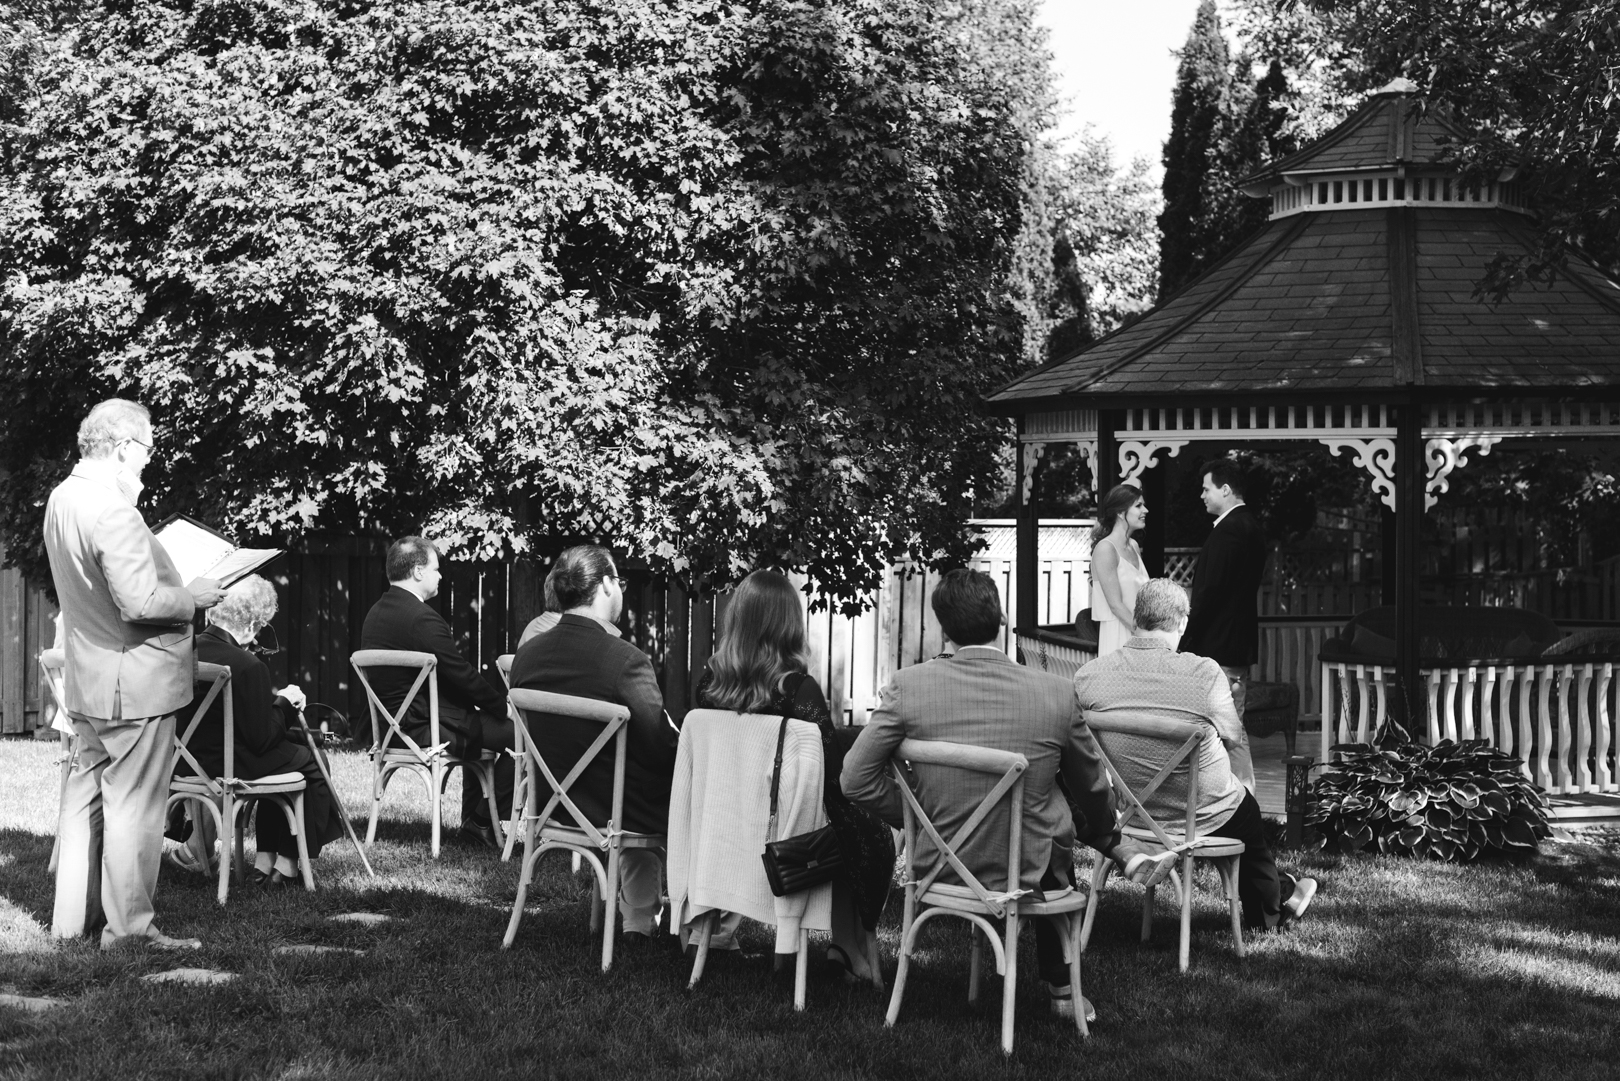 backyard wedding ceremony in front of pergola